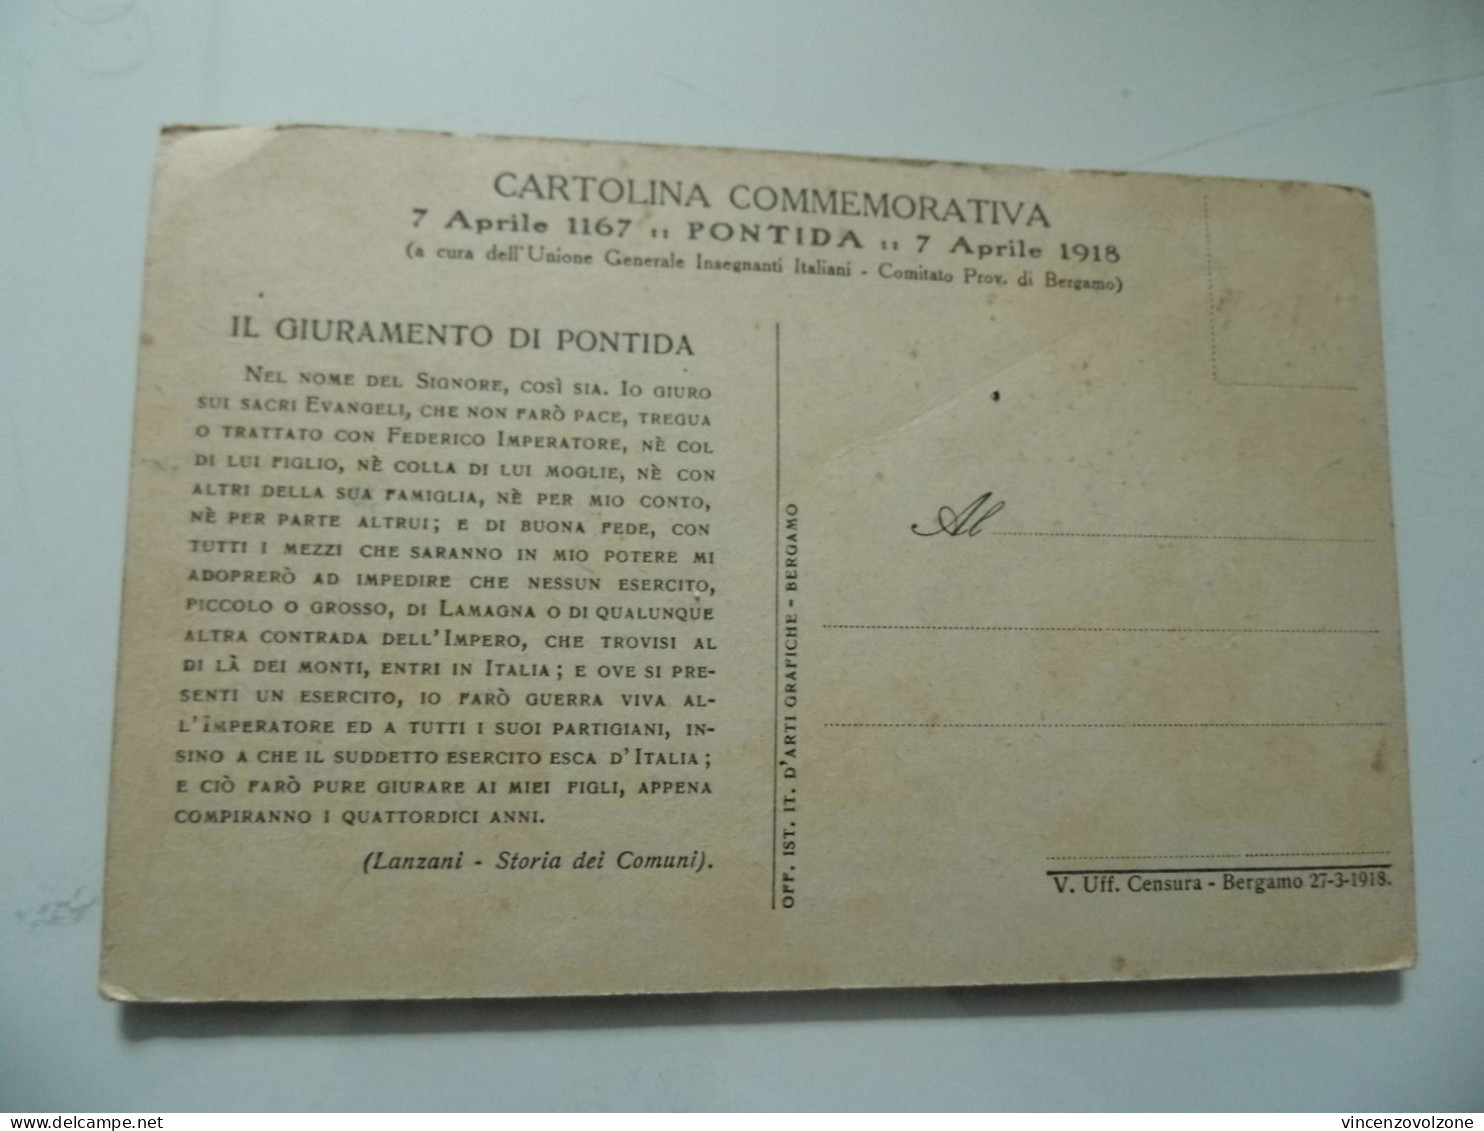 Cartolina "CARTOLINA COMMEMORATIVA GIURAMENTO DI PONTIDA" 1918 - Manifestaciones